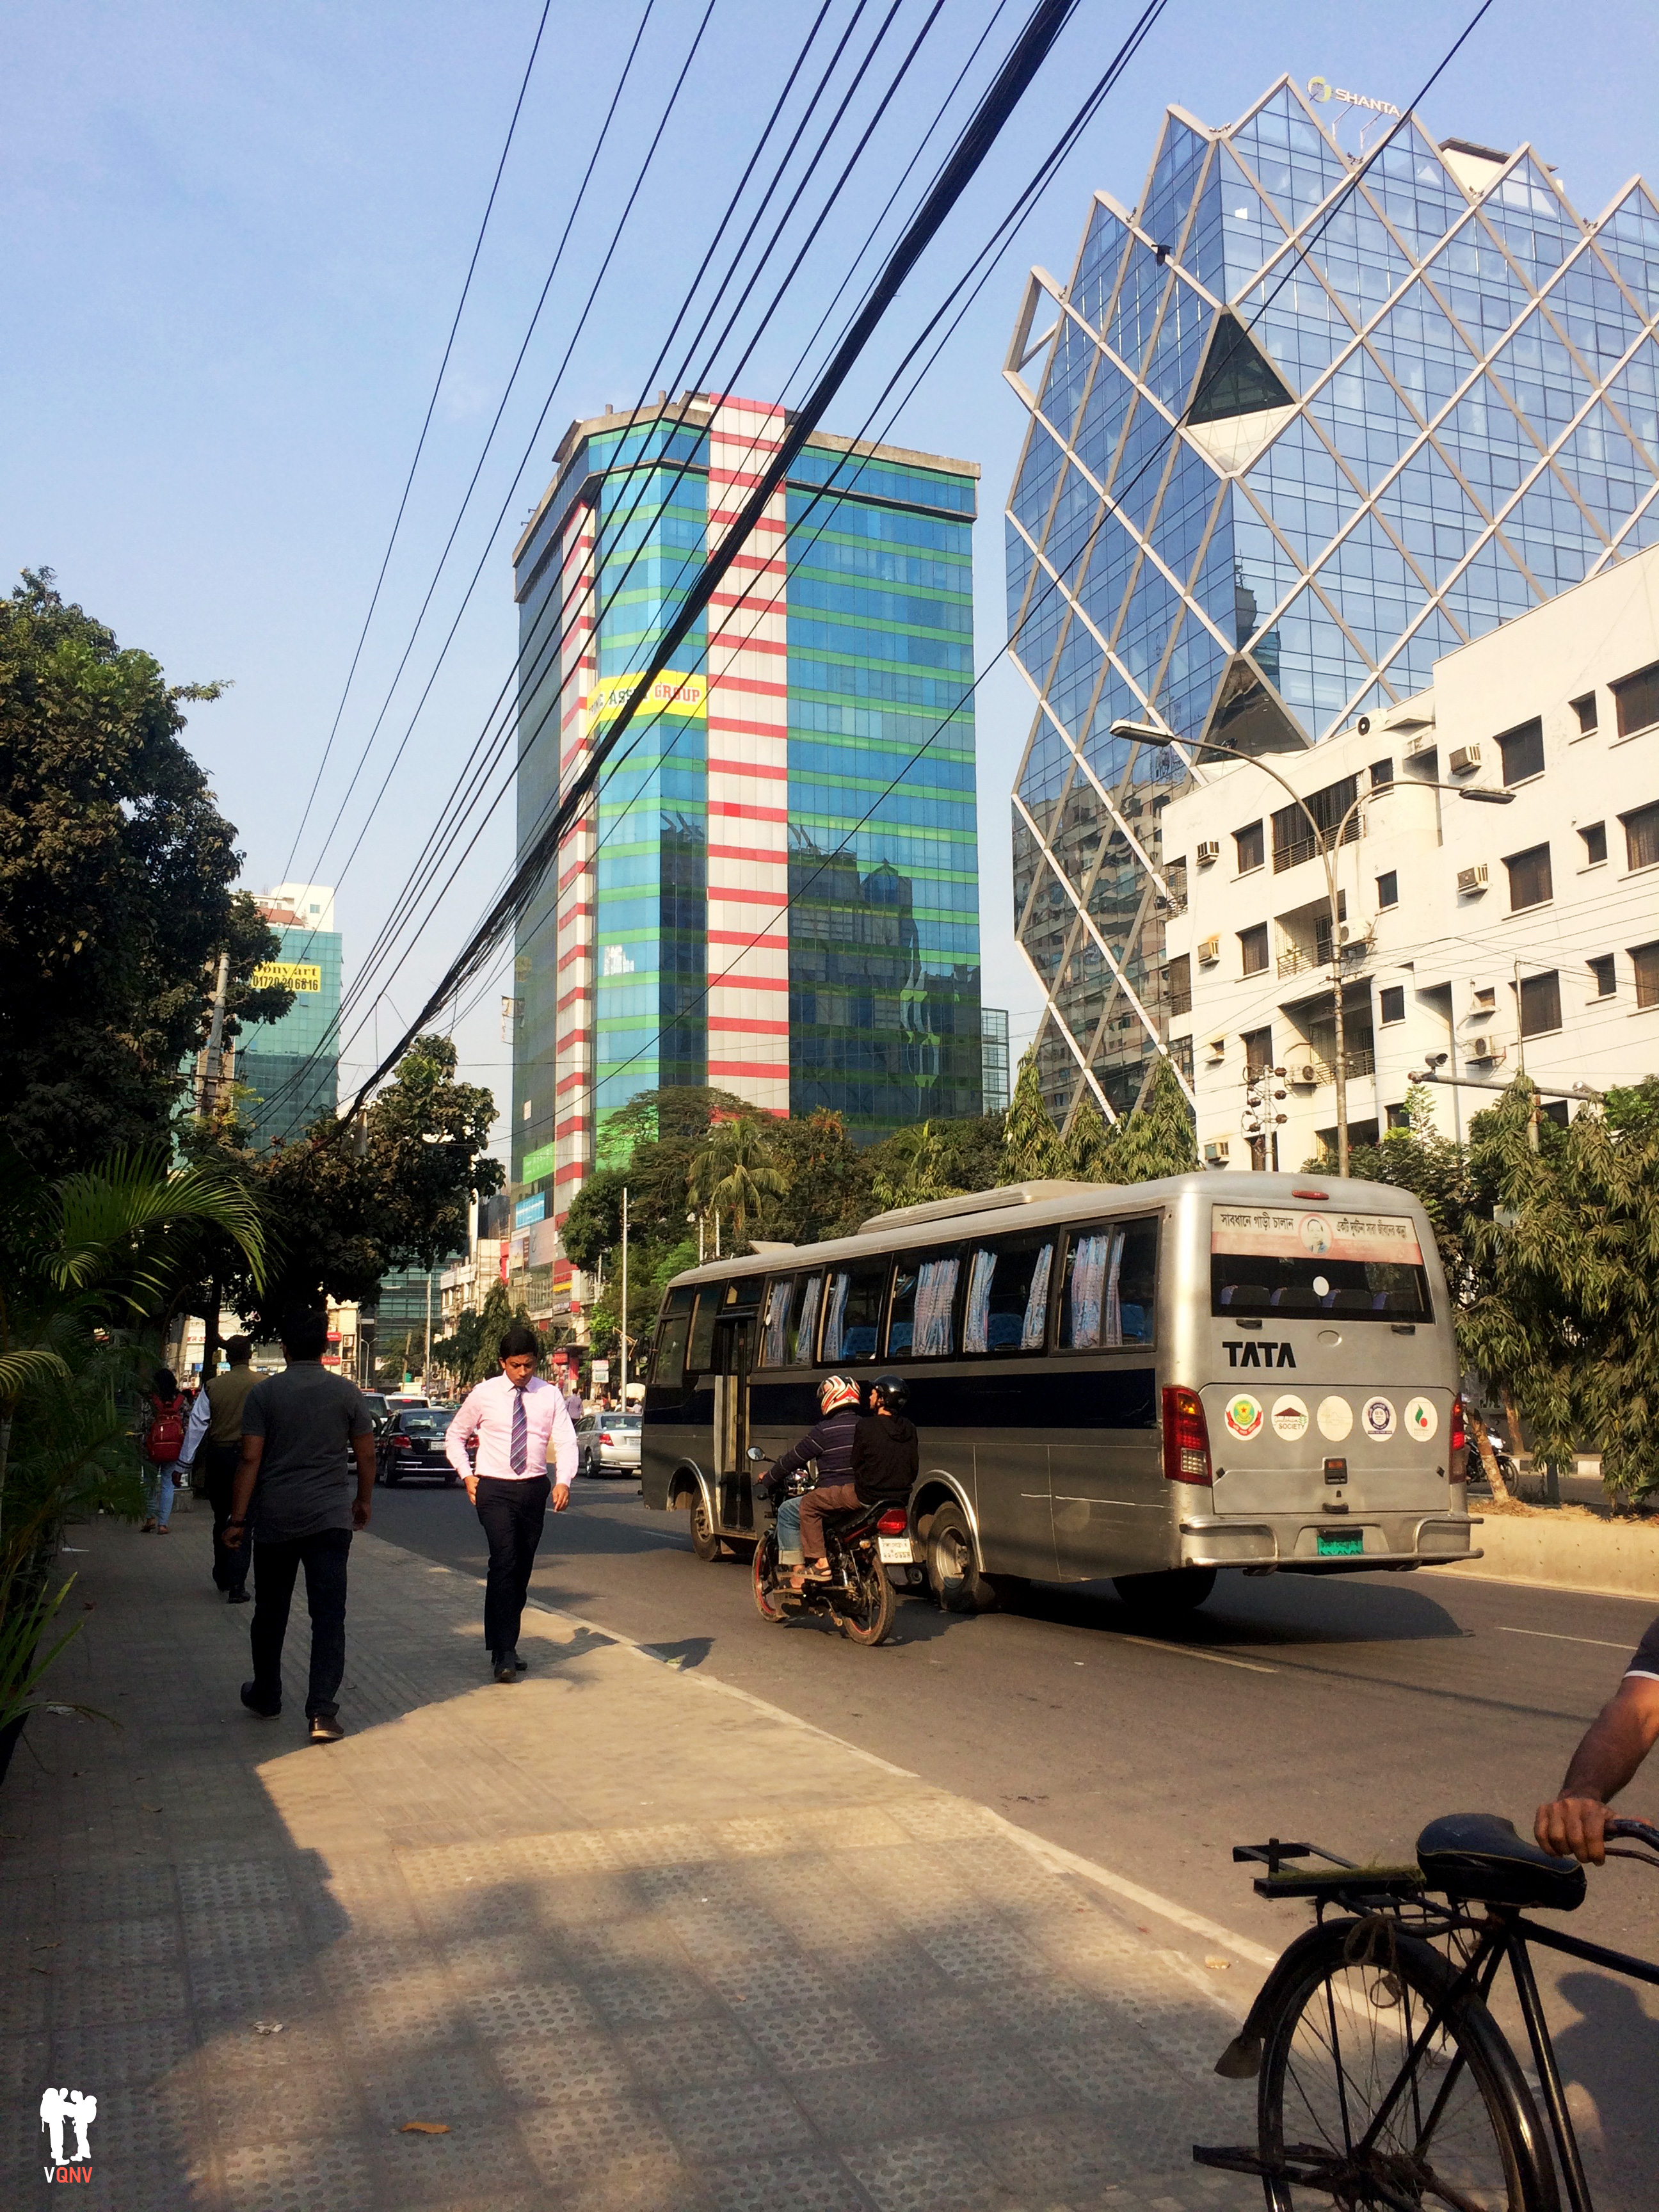 Gulshan y Baridhara son barrios residenciales de Dhaka